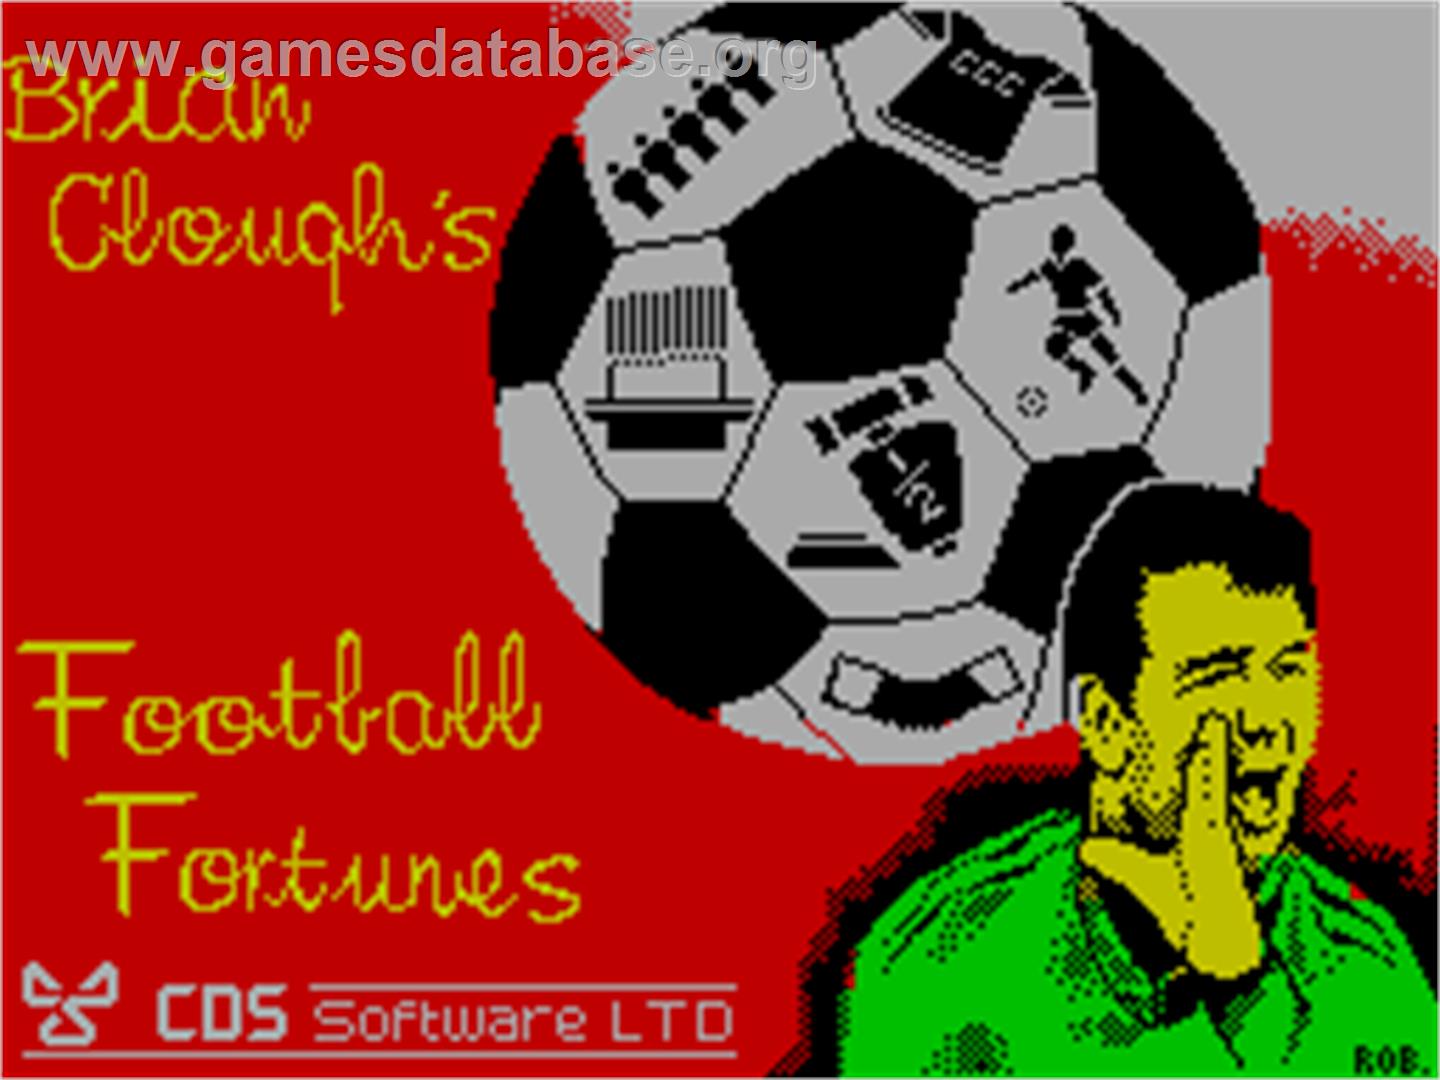 Brian Clough's Football Fortunes - Sinclair ZX Spectrum - Artwork - Title Screen